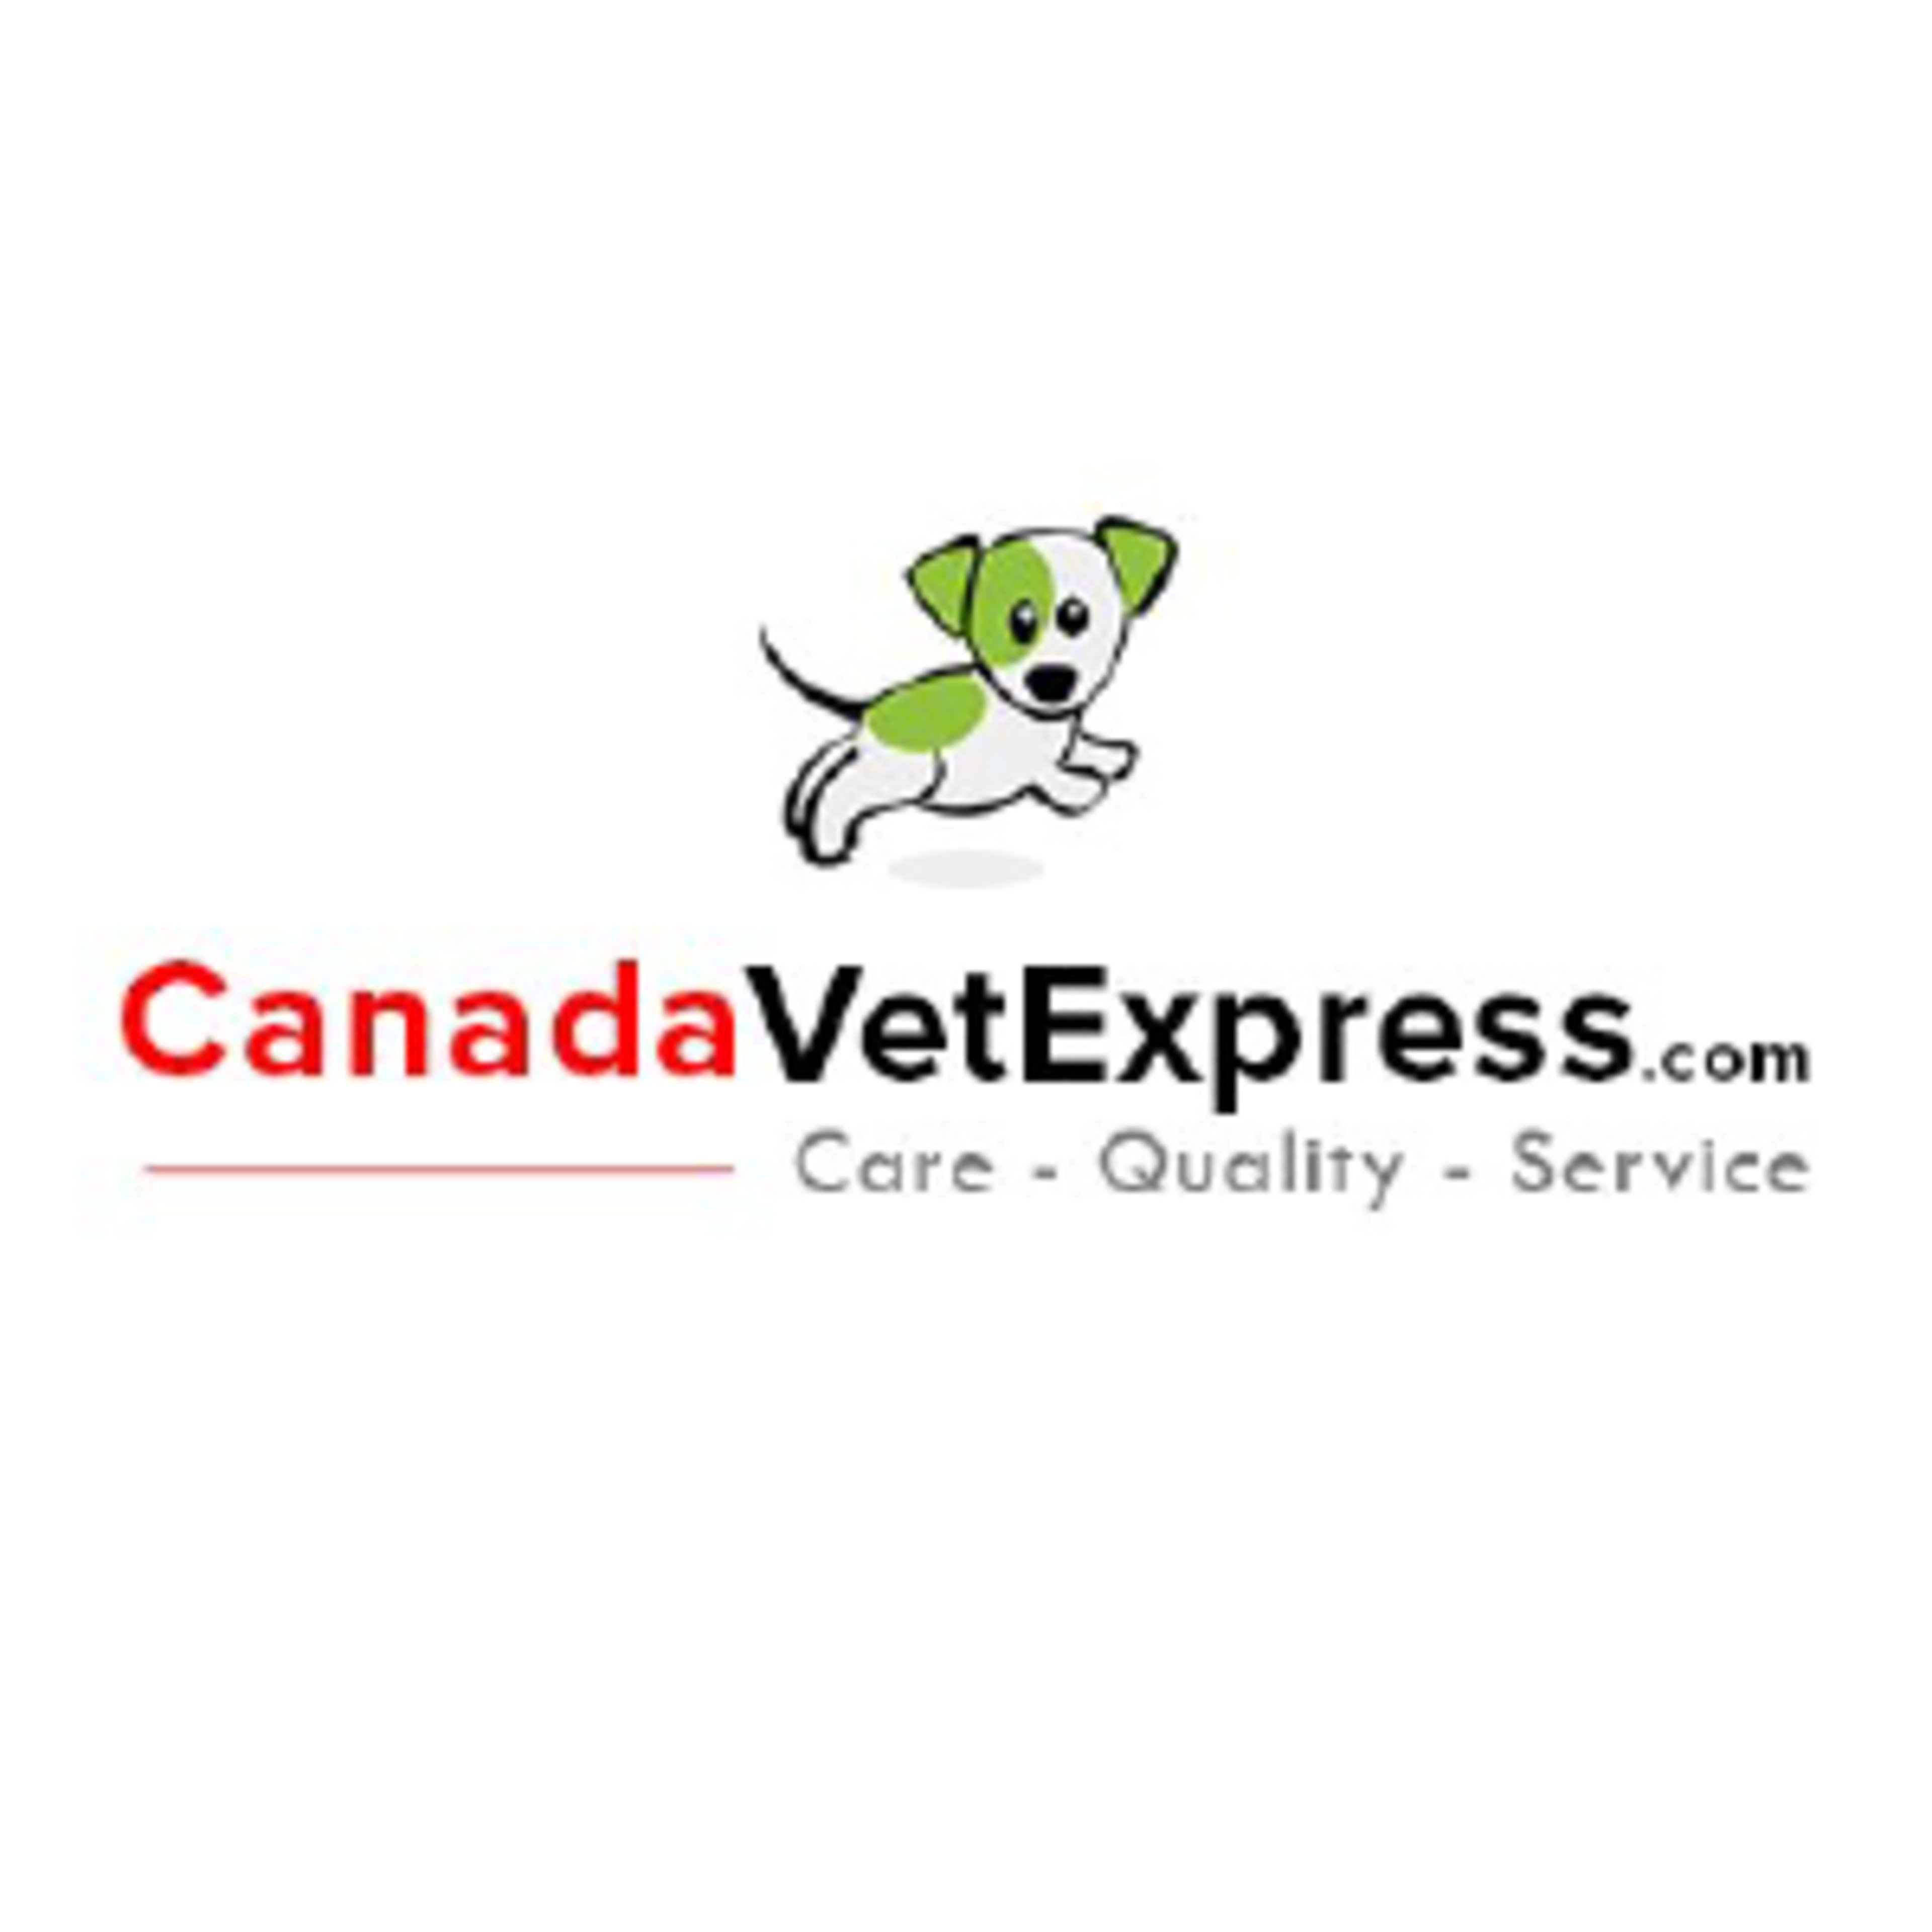 CanadaVetExpress Code